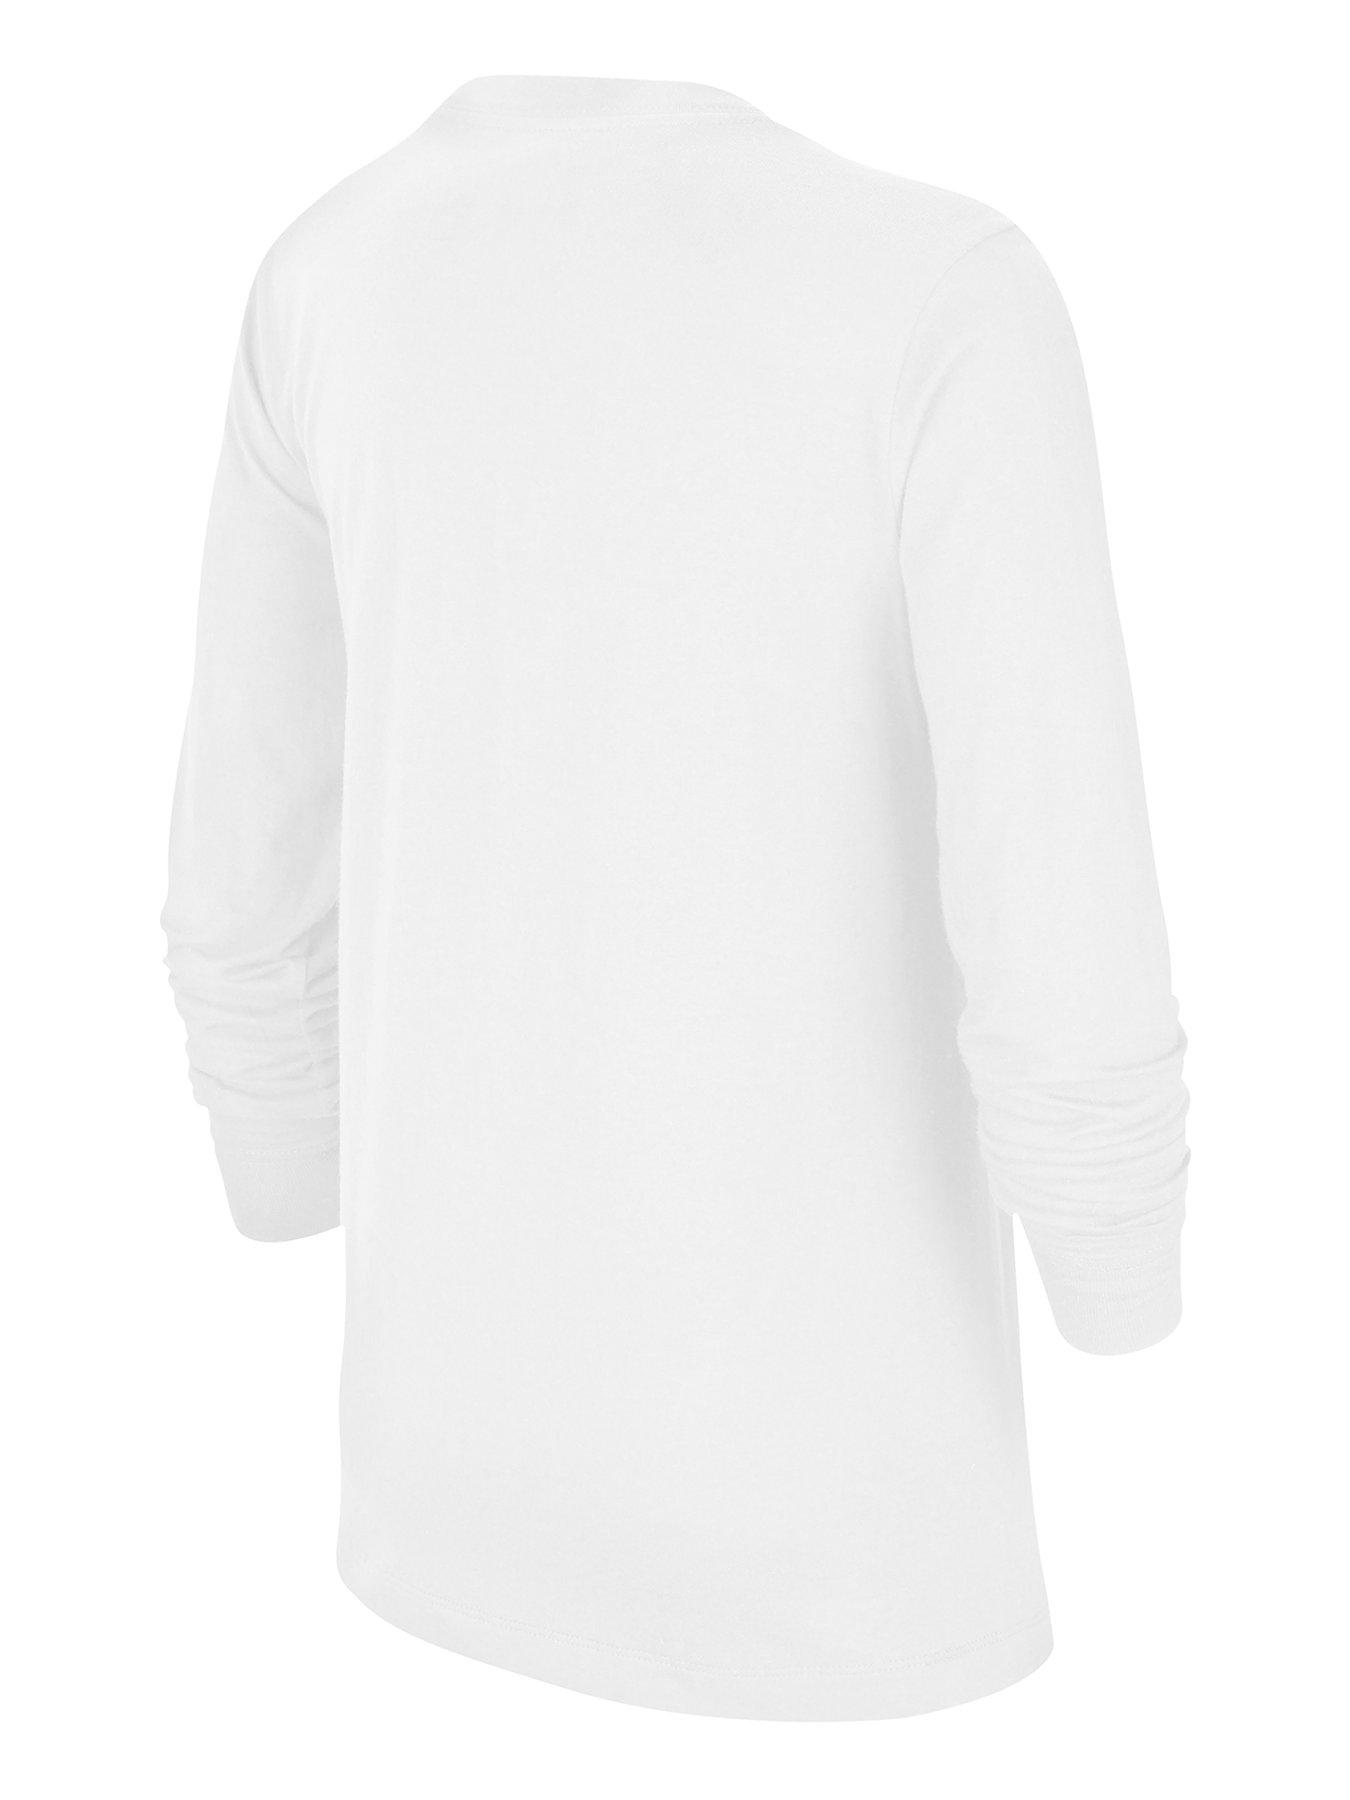 Nike Older Boys Futura T-shirt - White/Black | very.co.uk